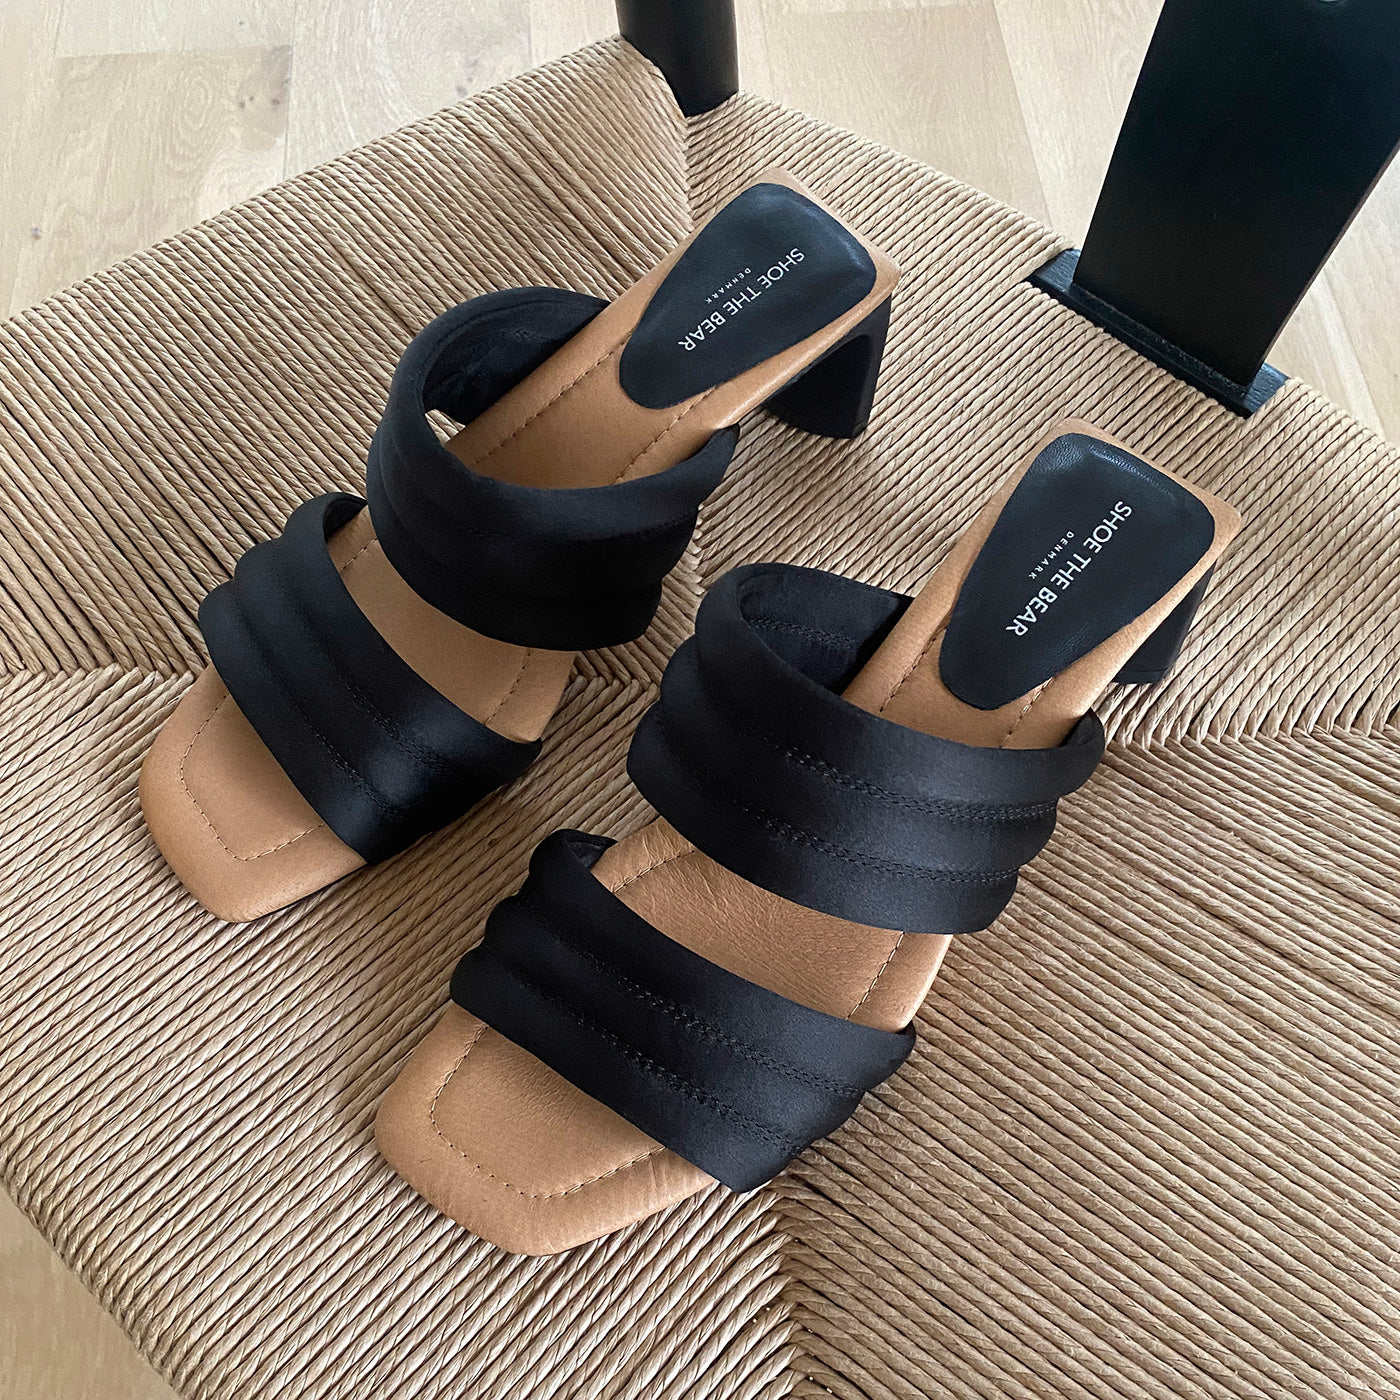 SHOE THE BEAR WOMENS Sylvi heel textile Heel Sandals 821 BLACK SATIN